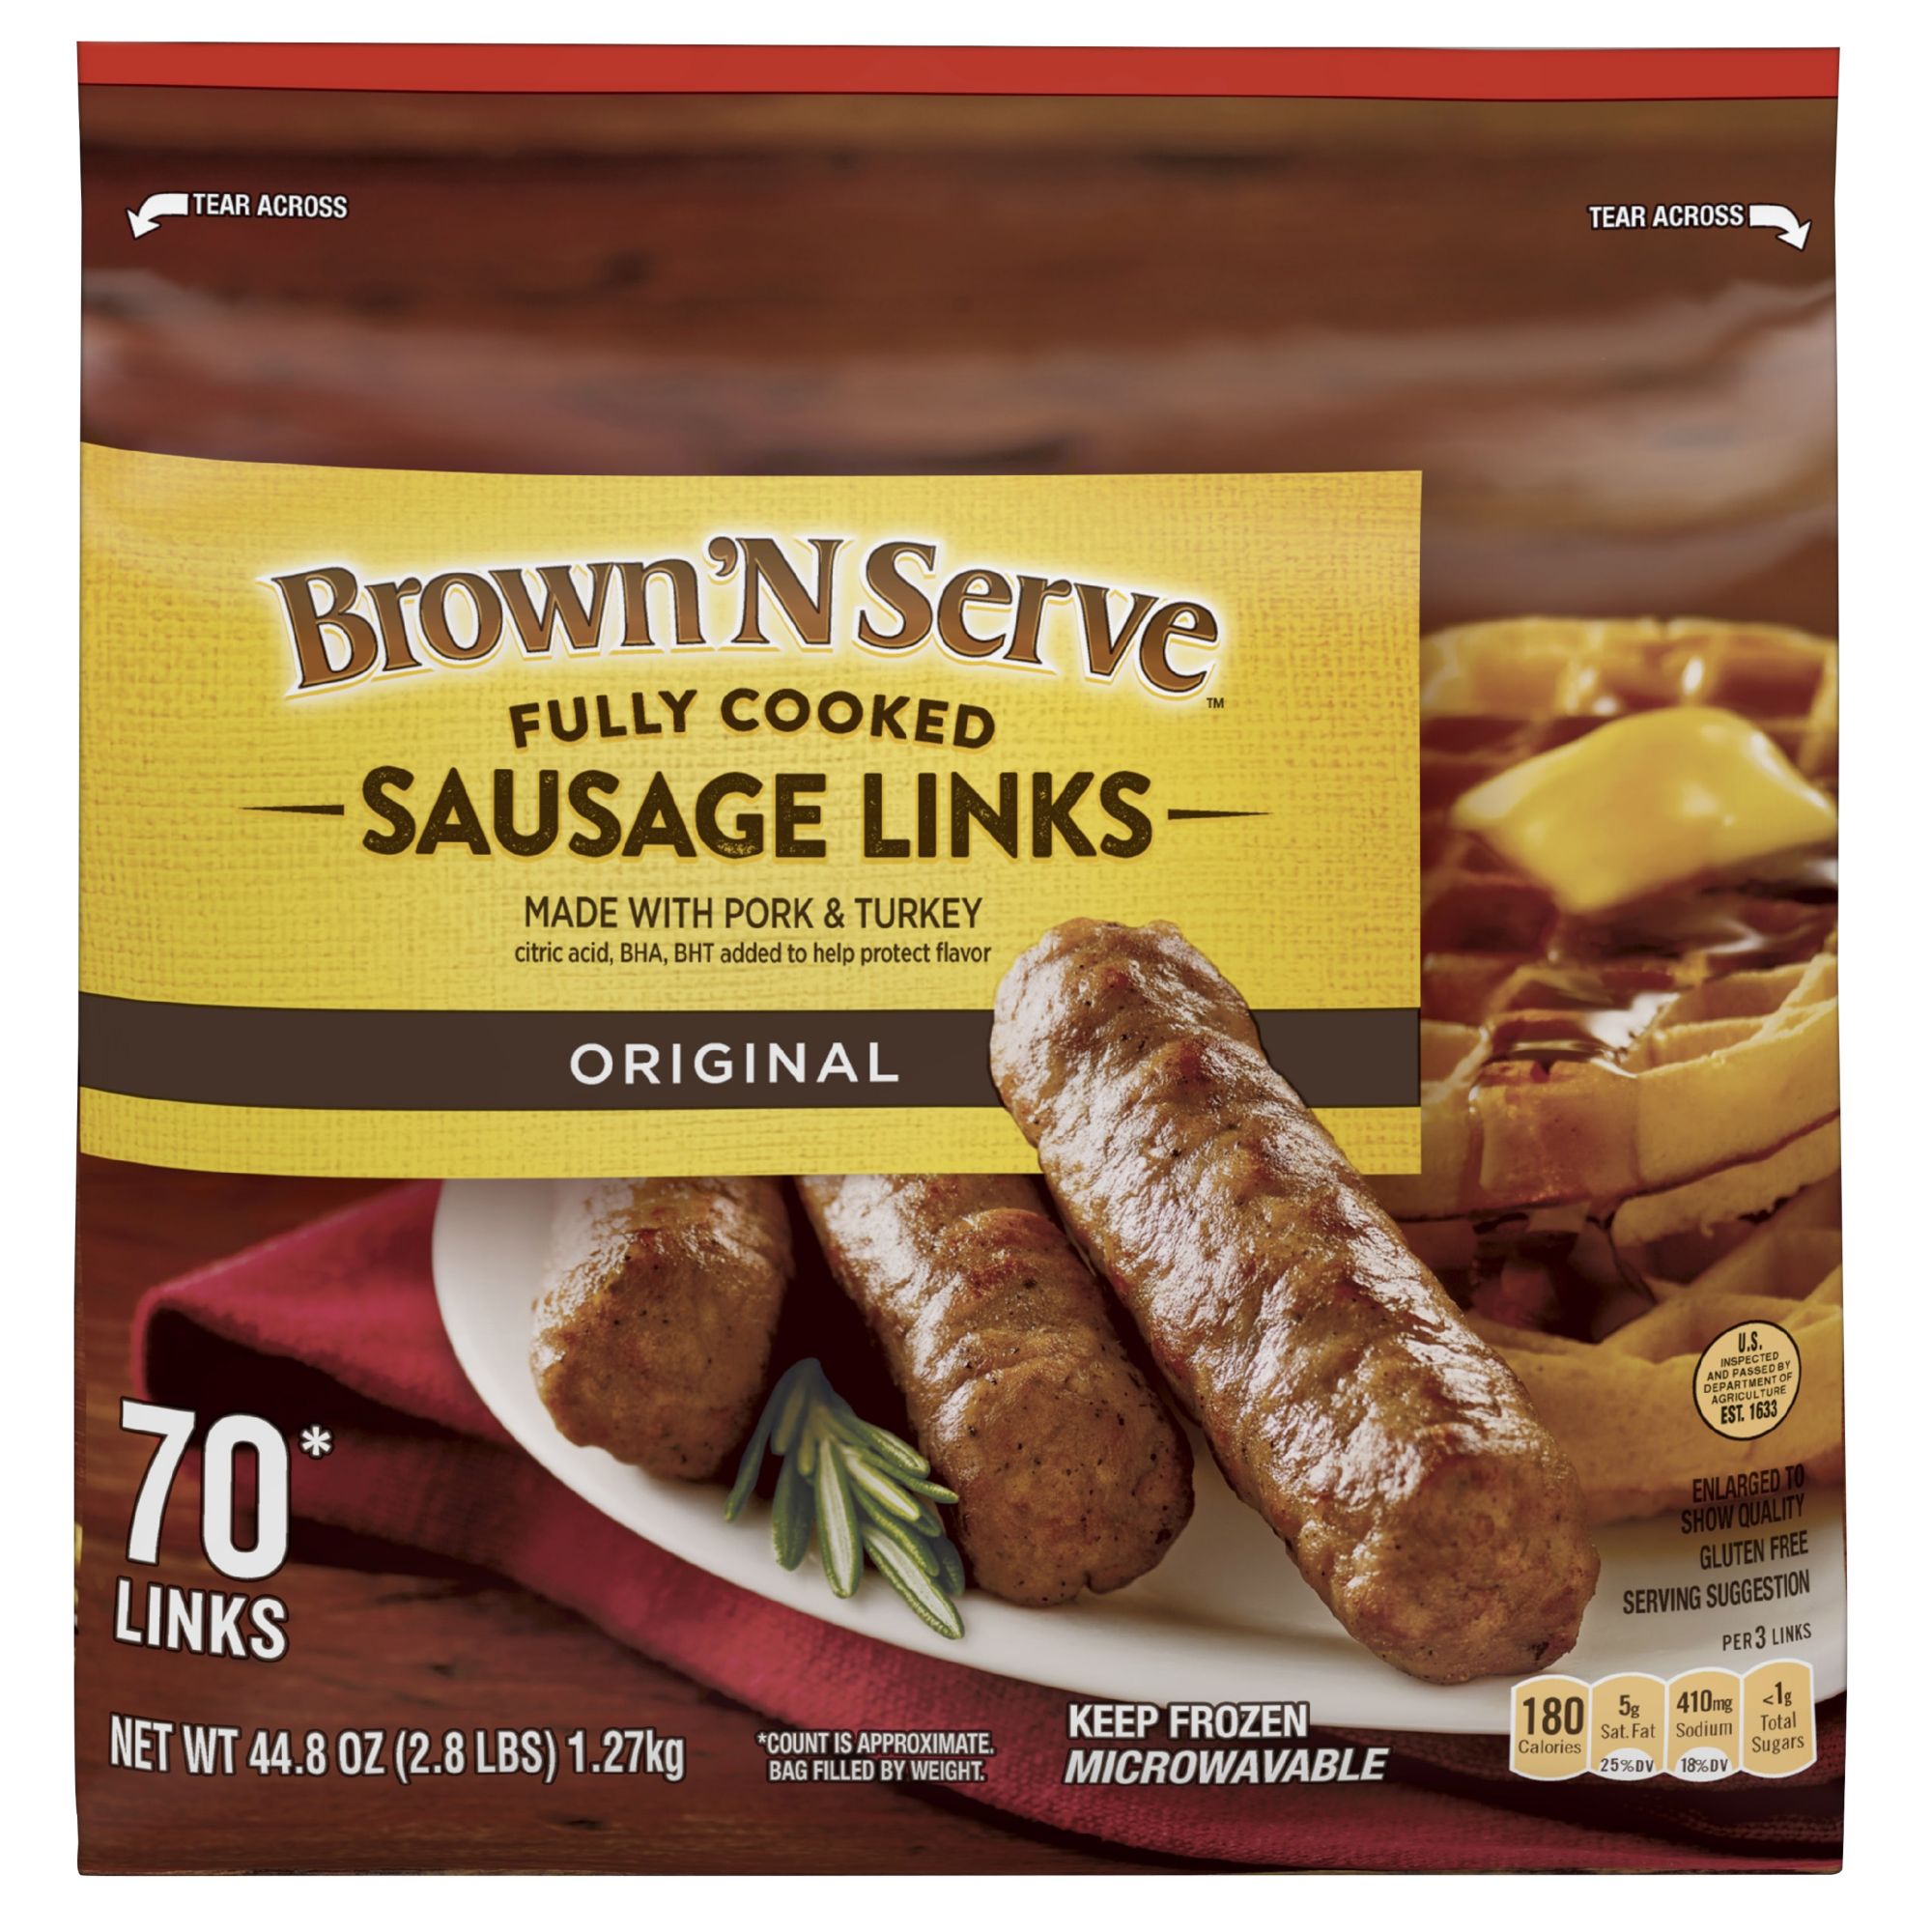 Banquet Brown 'N Serve Sausage Links, 70 ct.